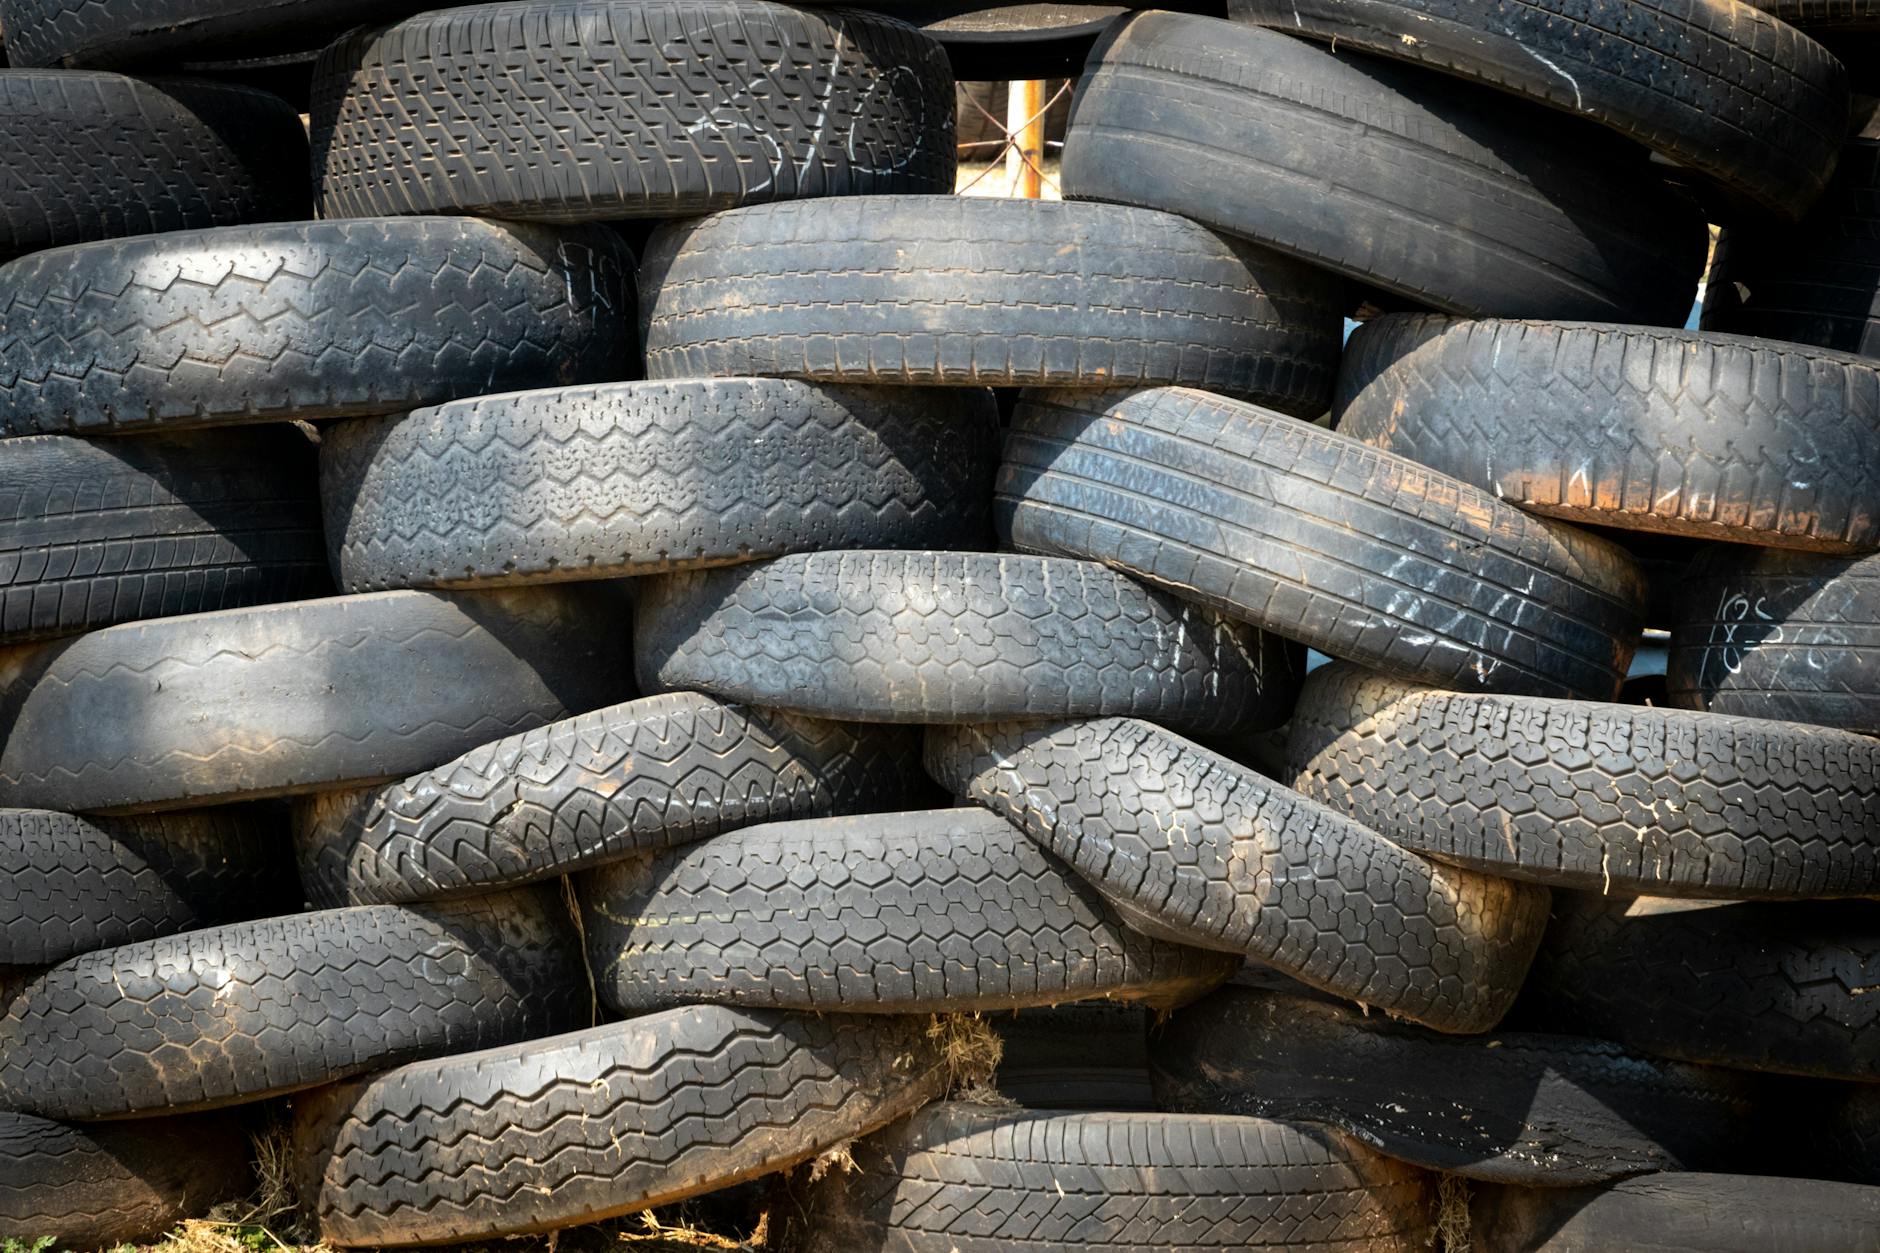 How long do tires last